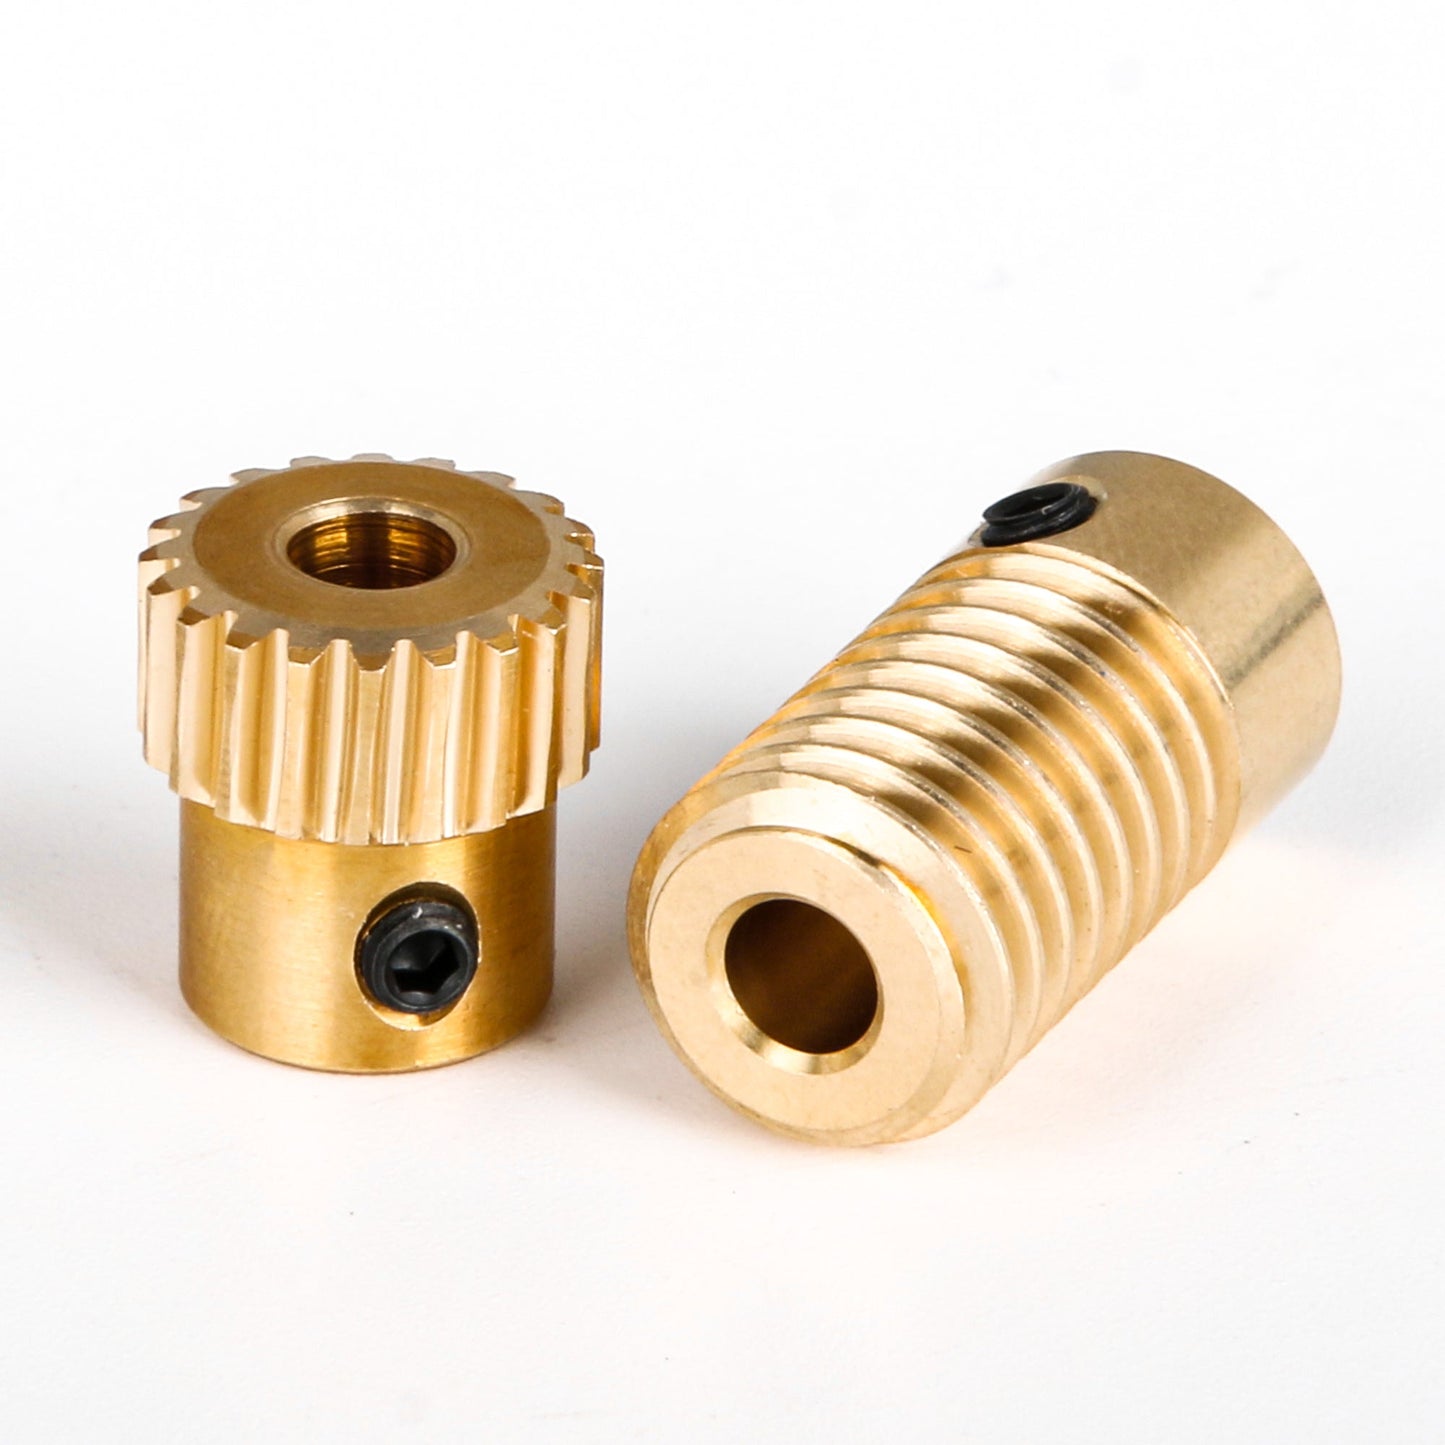 BQLZR 0.5Modulus Brass Gear Shaft with 20T Wheel Screw 4mm Hole Industrial Accessories